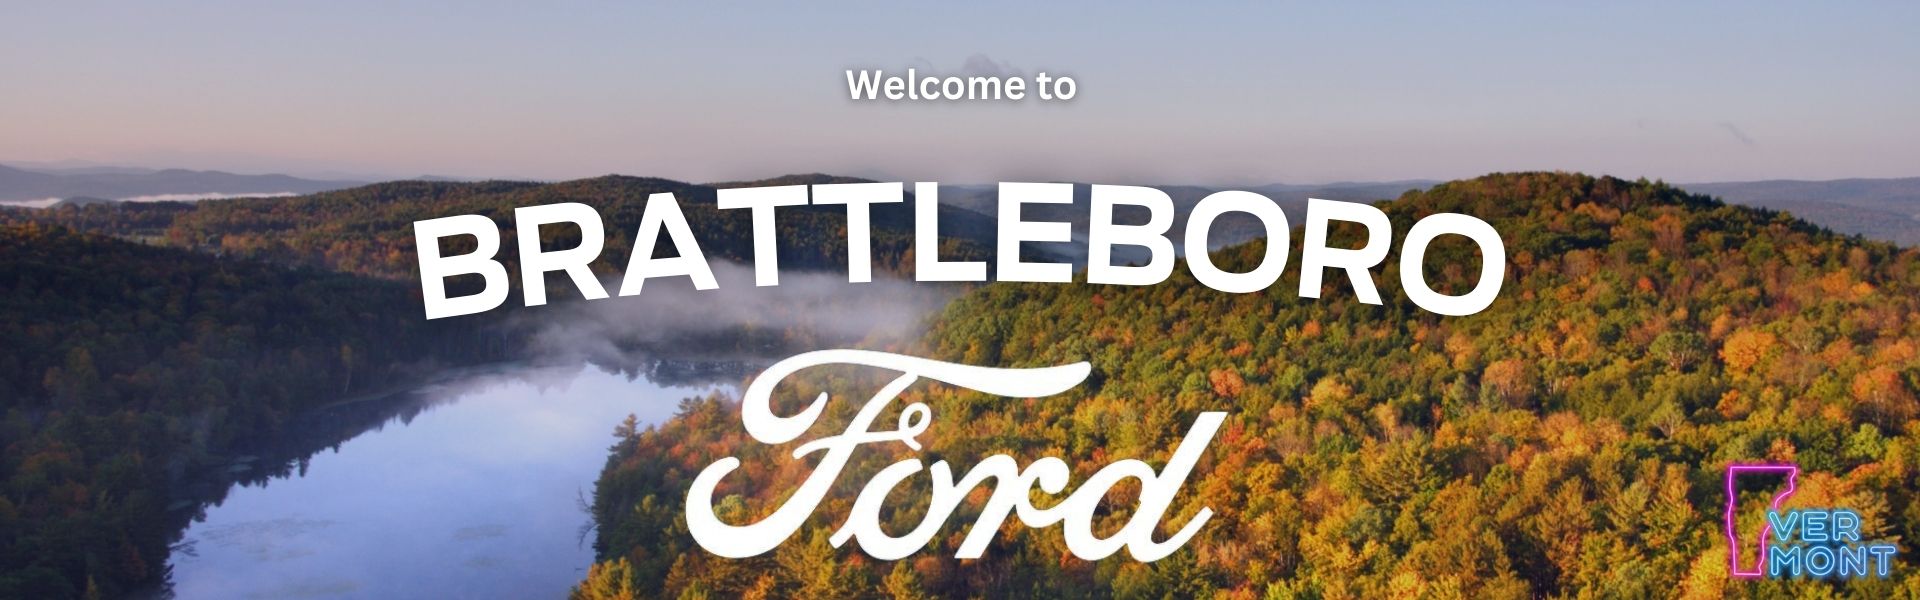 New Brattleboro Ford Vermont